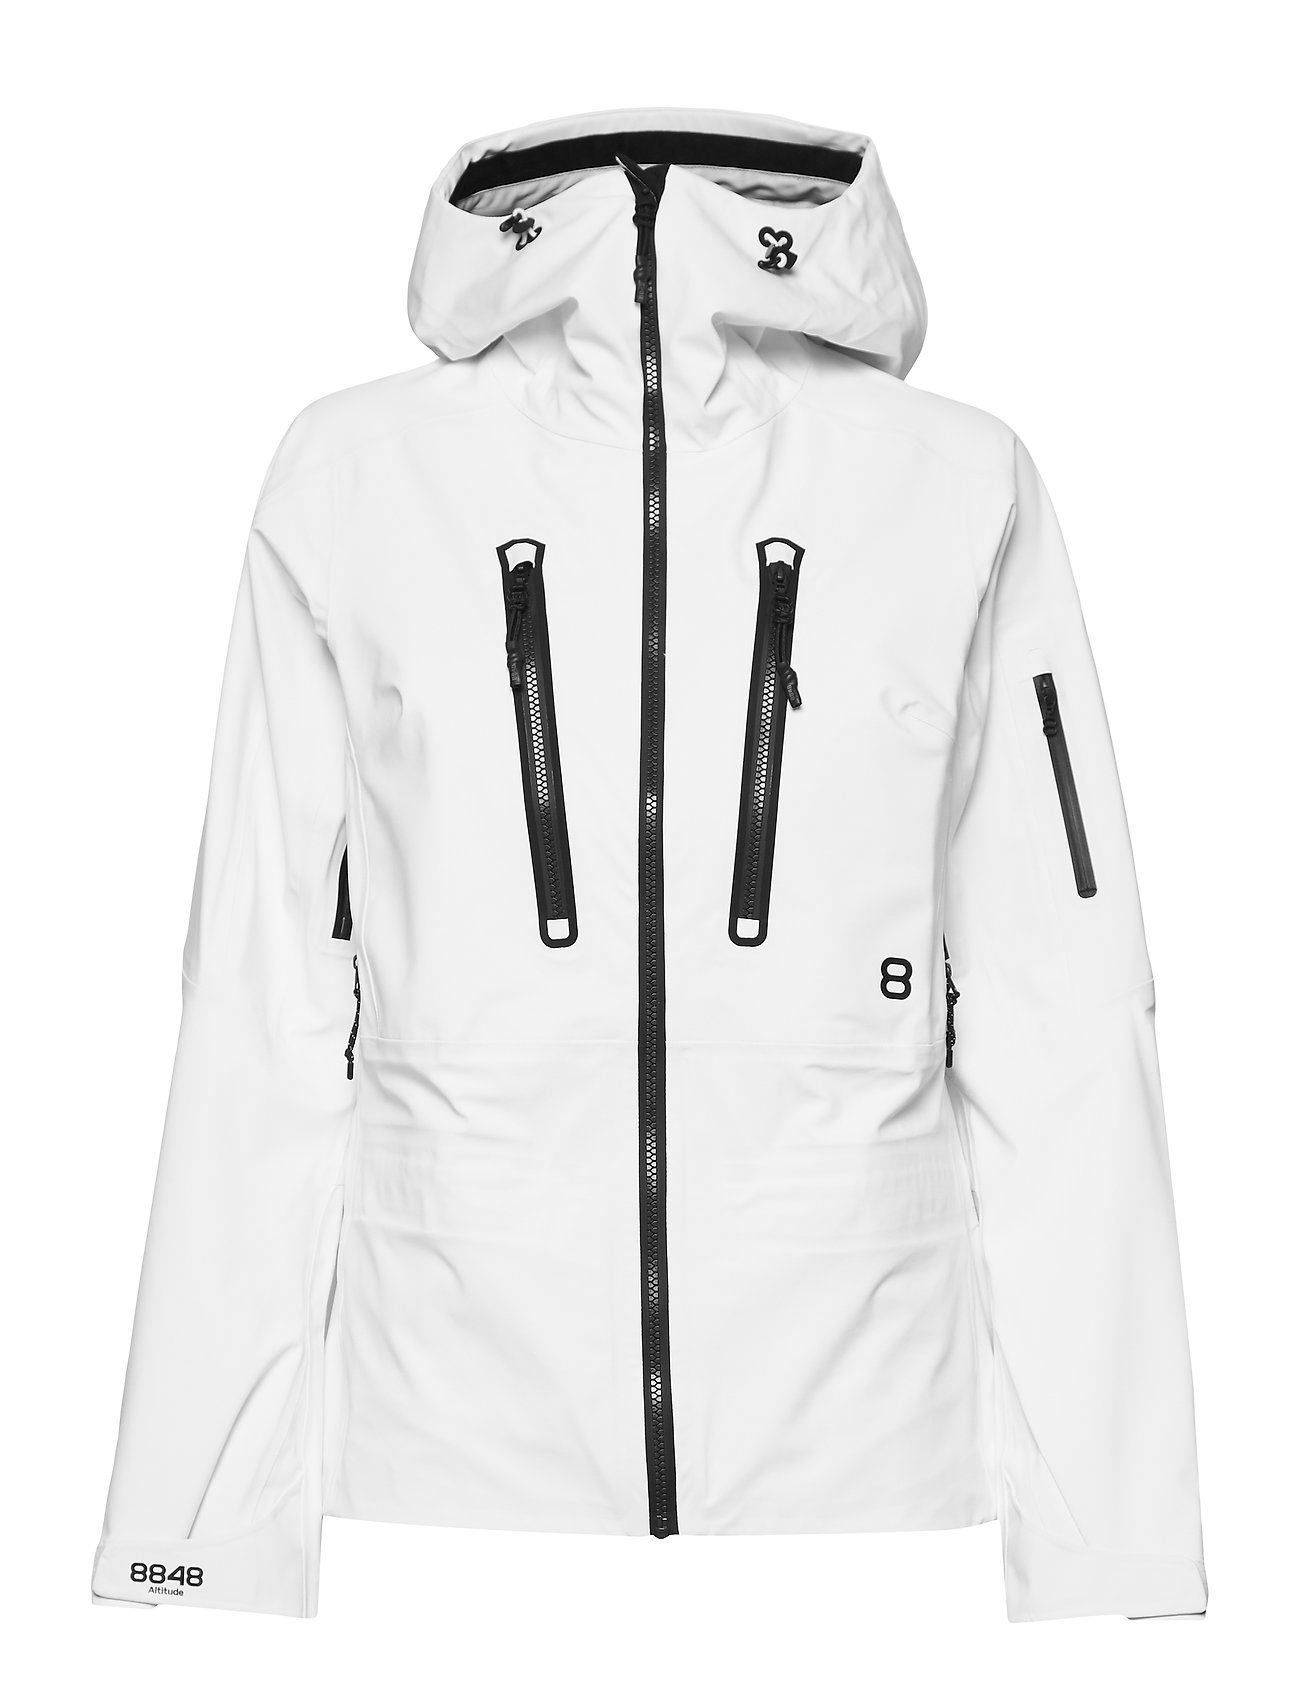 8848 Altitude jakker – Pow W Jacket Outerwear Sport Jackets Hvid 8848 Altitude til dame Sort - Pashion.dk